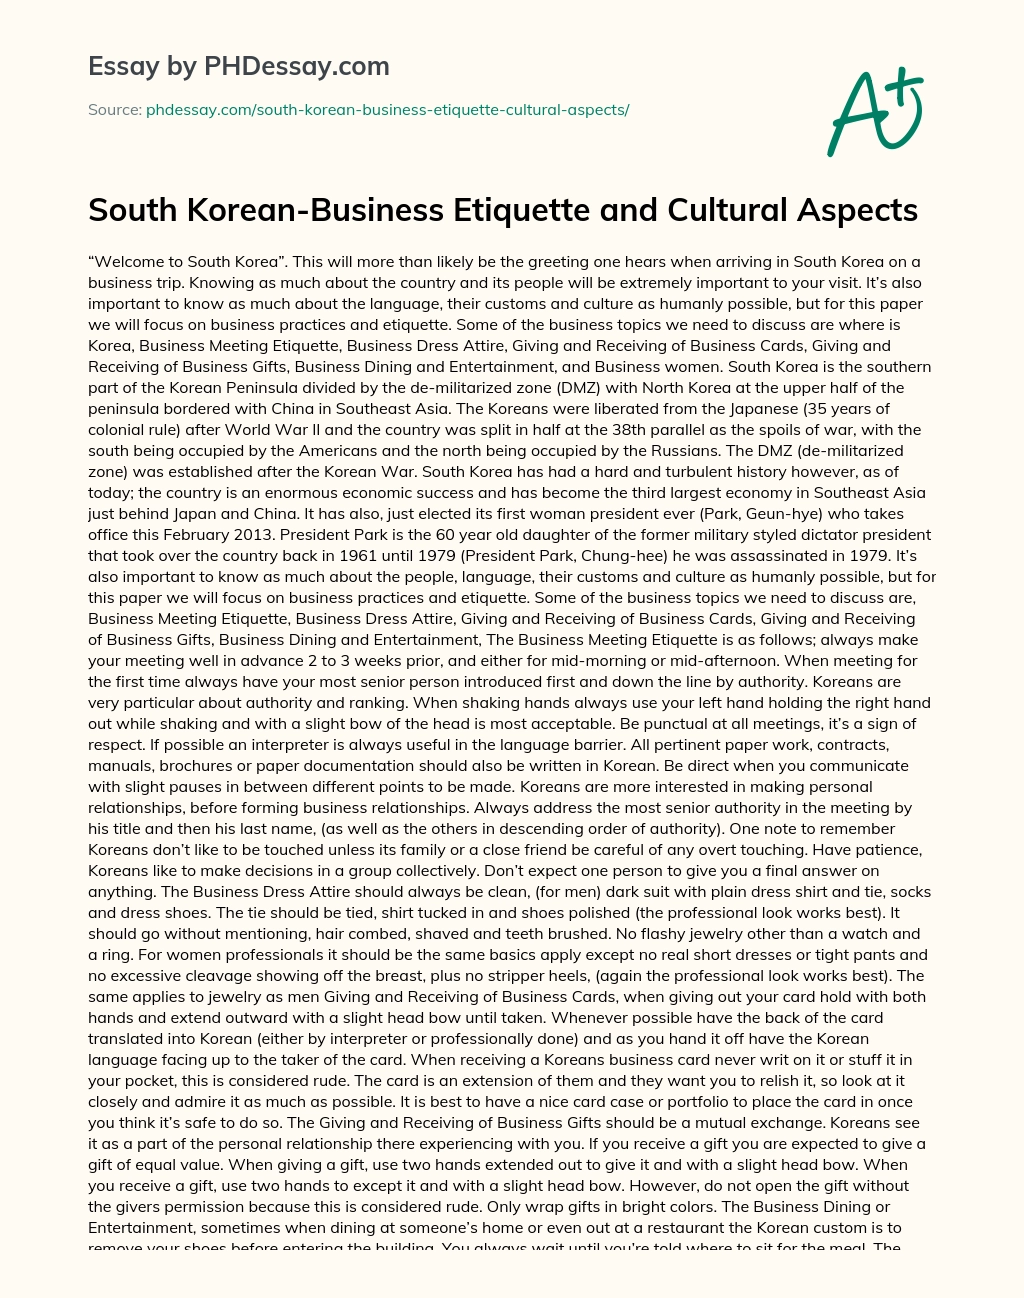 South Korean-Business Etiquette and Cultural Aspects essay